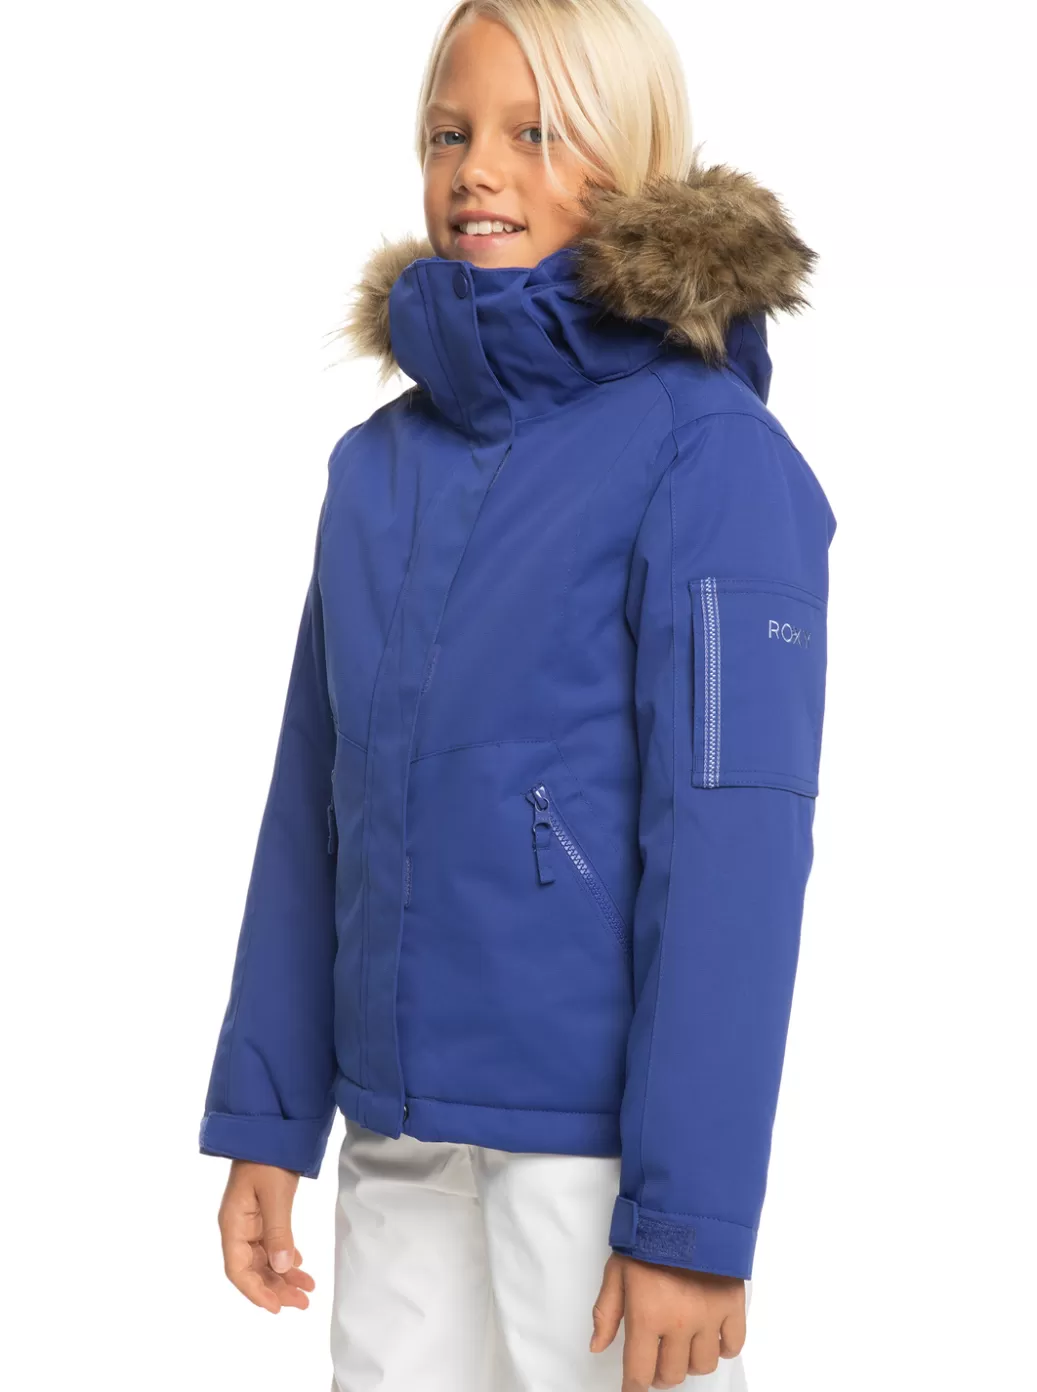 Snow Jackets | Girls Snow | KIDS | WOMEN ROXY Girl's 4-16 Meade Technical Snow Jacket Bluing